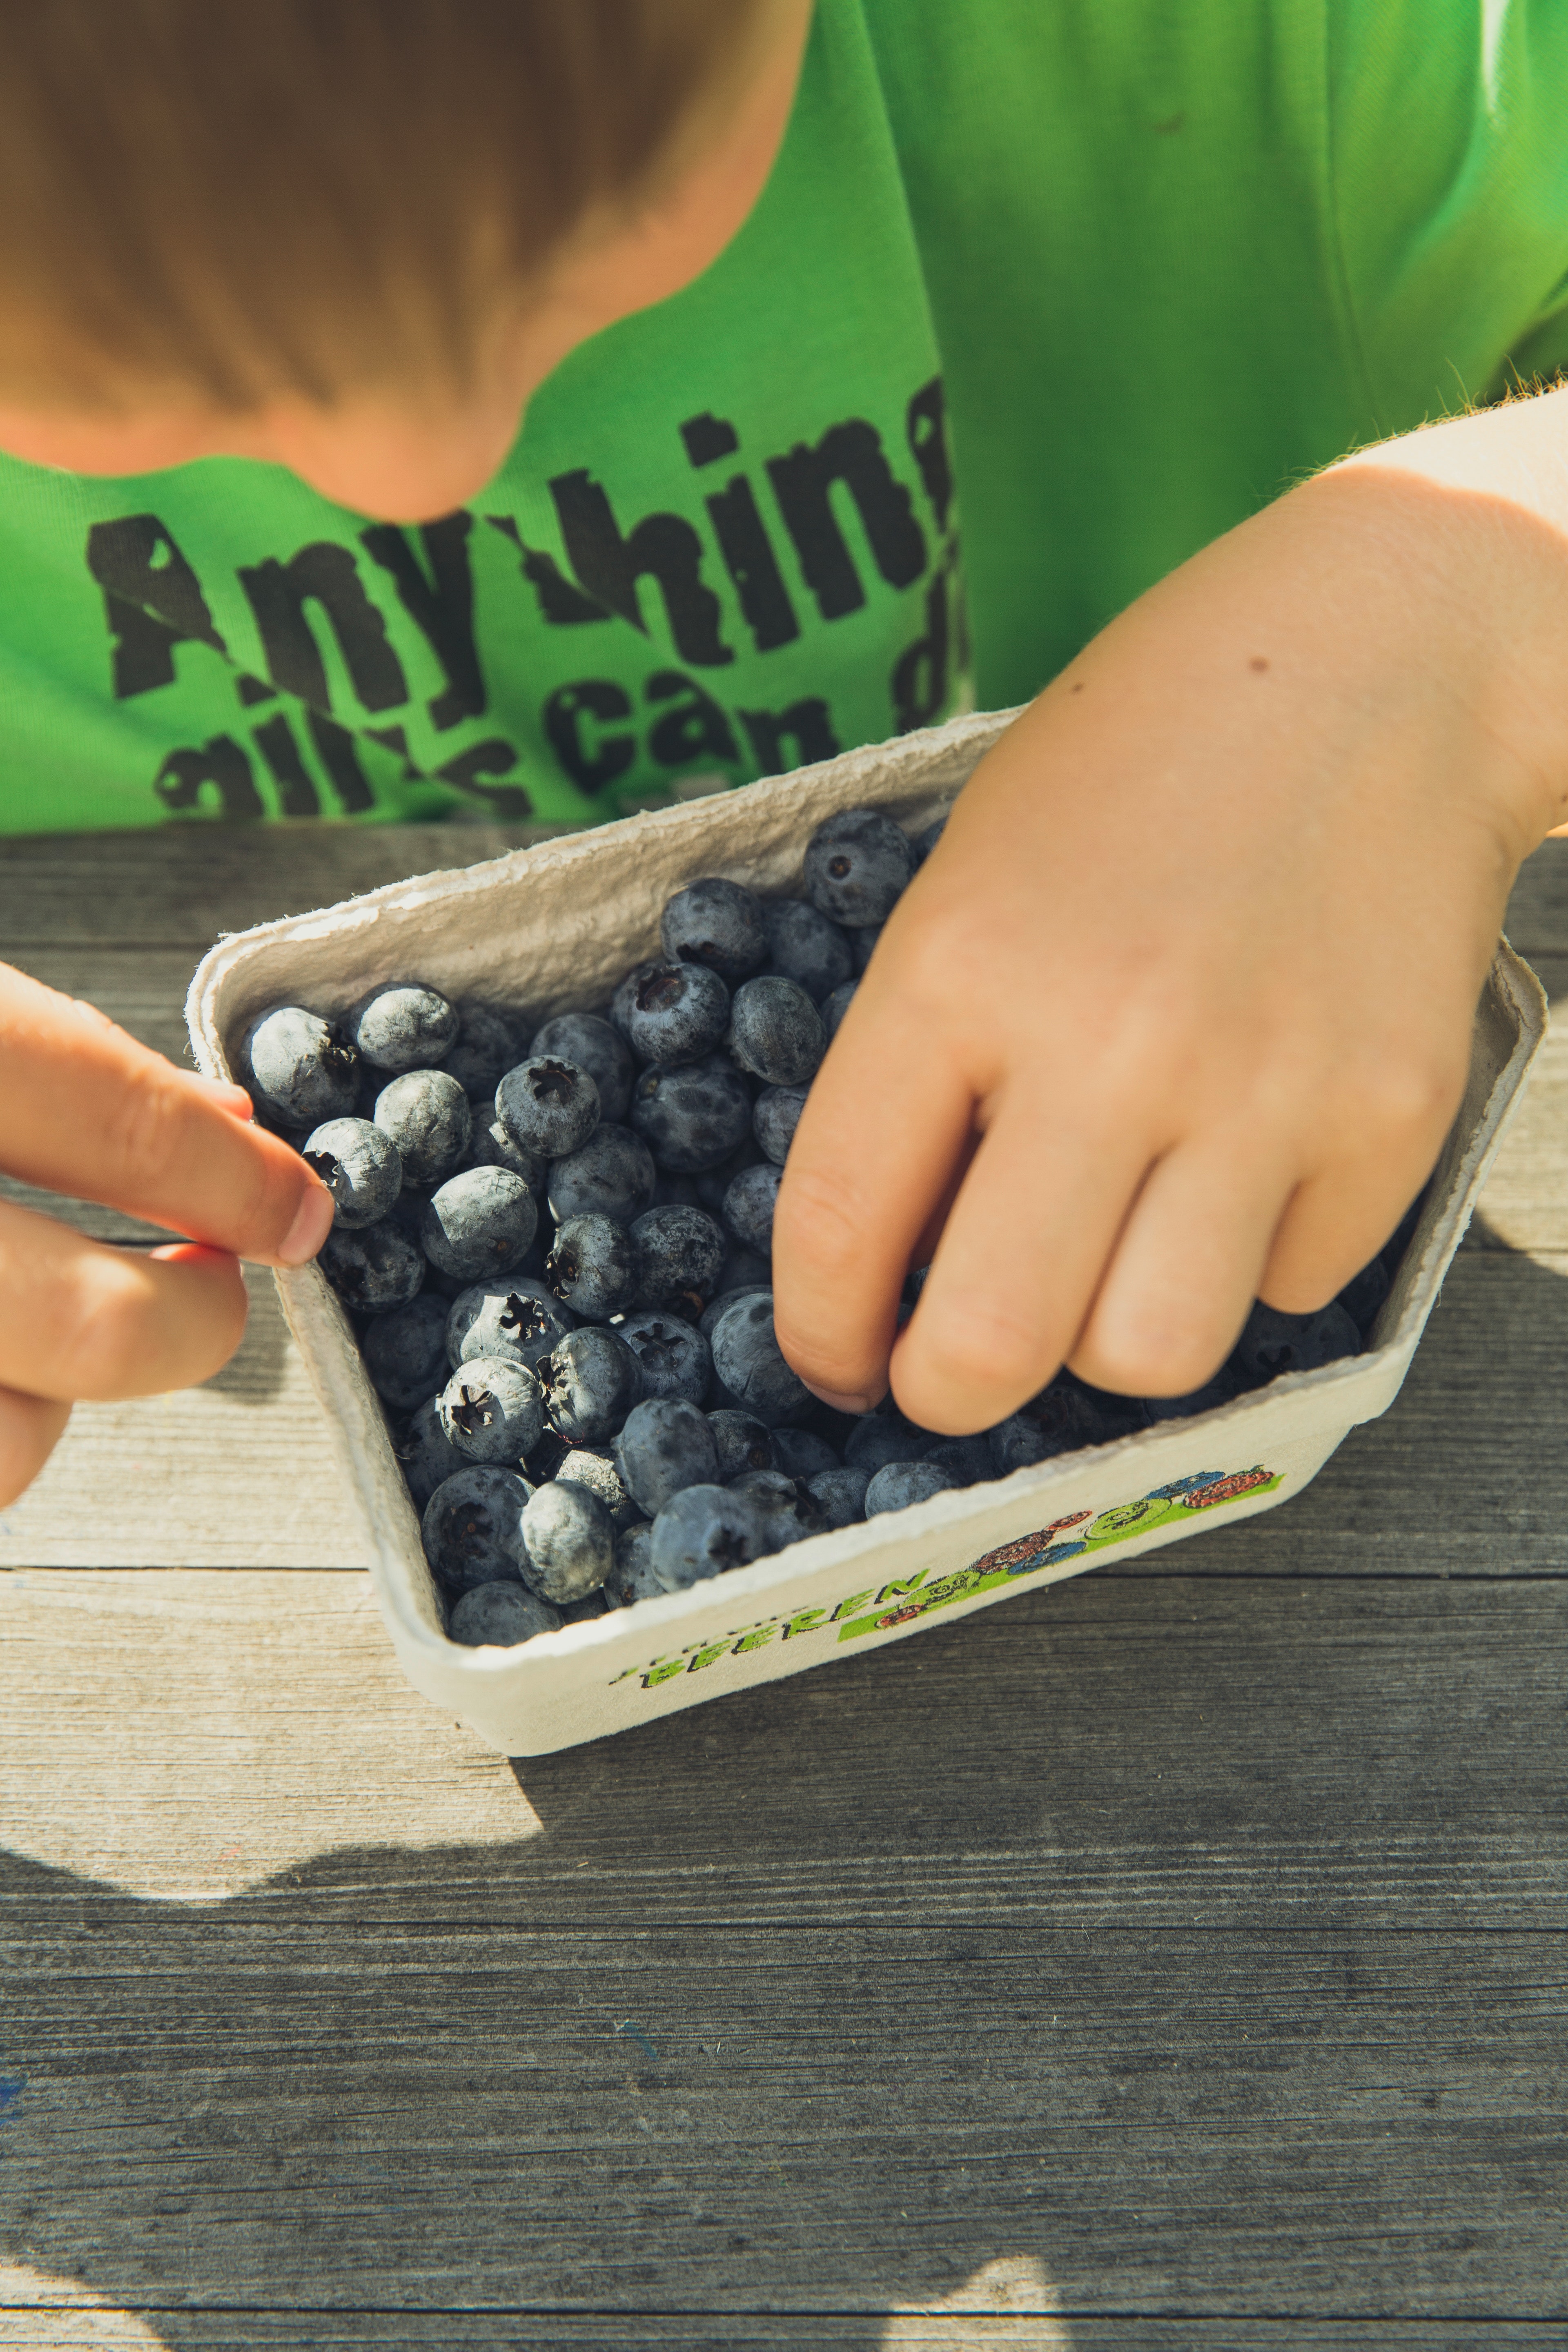 Boy picking on blueberries in cardboard box photo